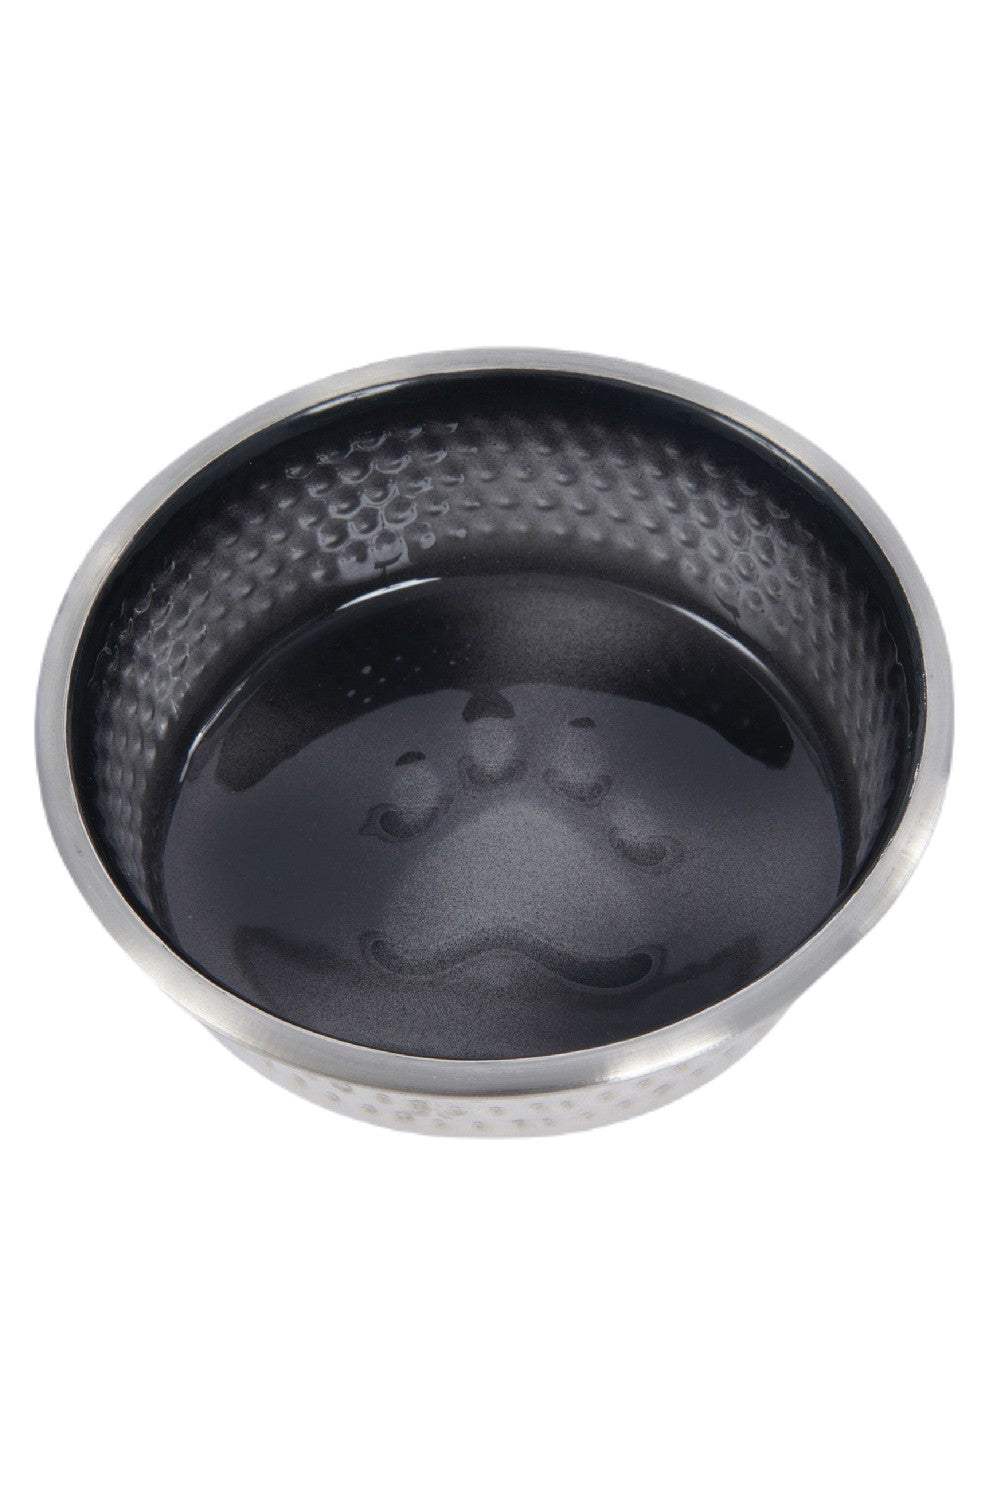 WeatherBeeta Non-Slip Stainless Shade Dog Bowl in Black 